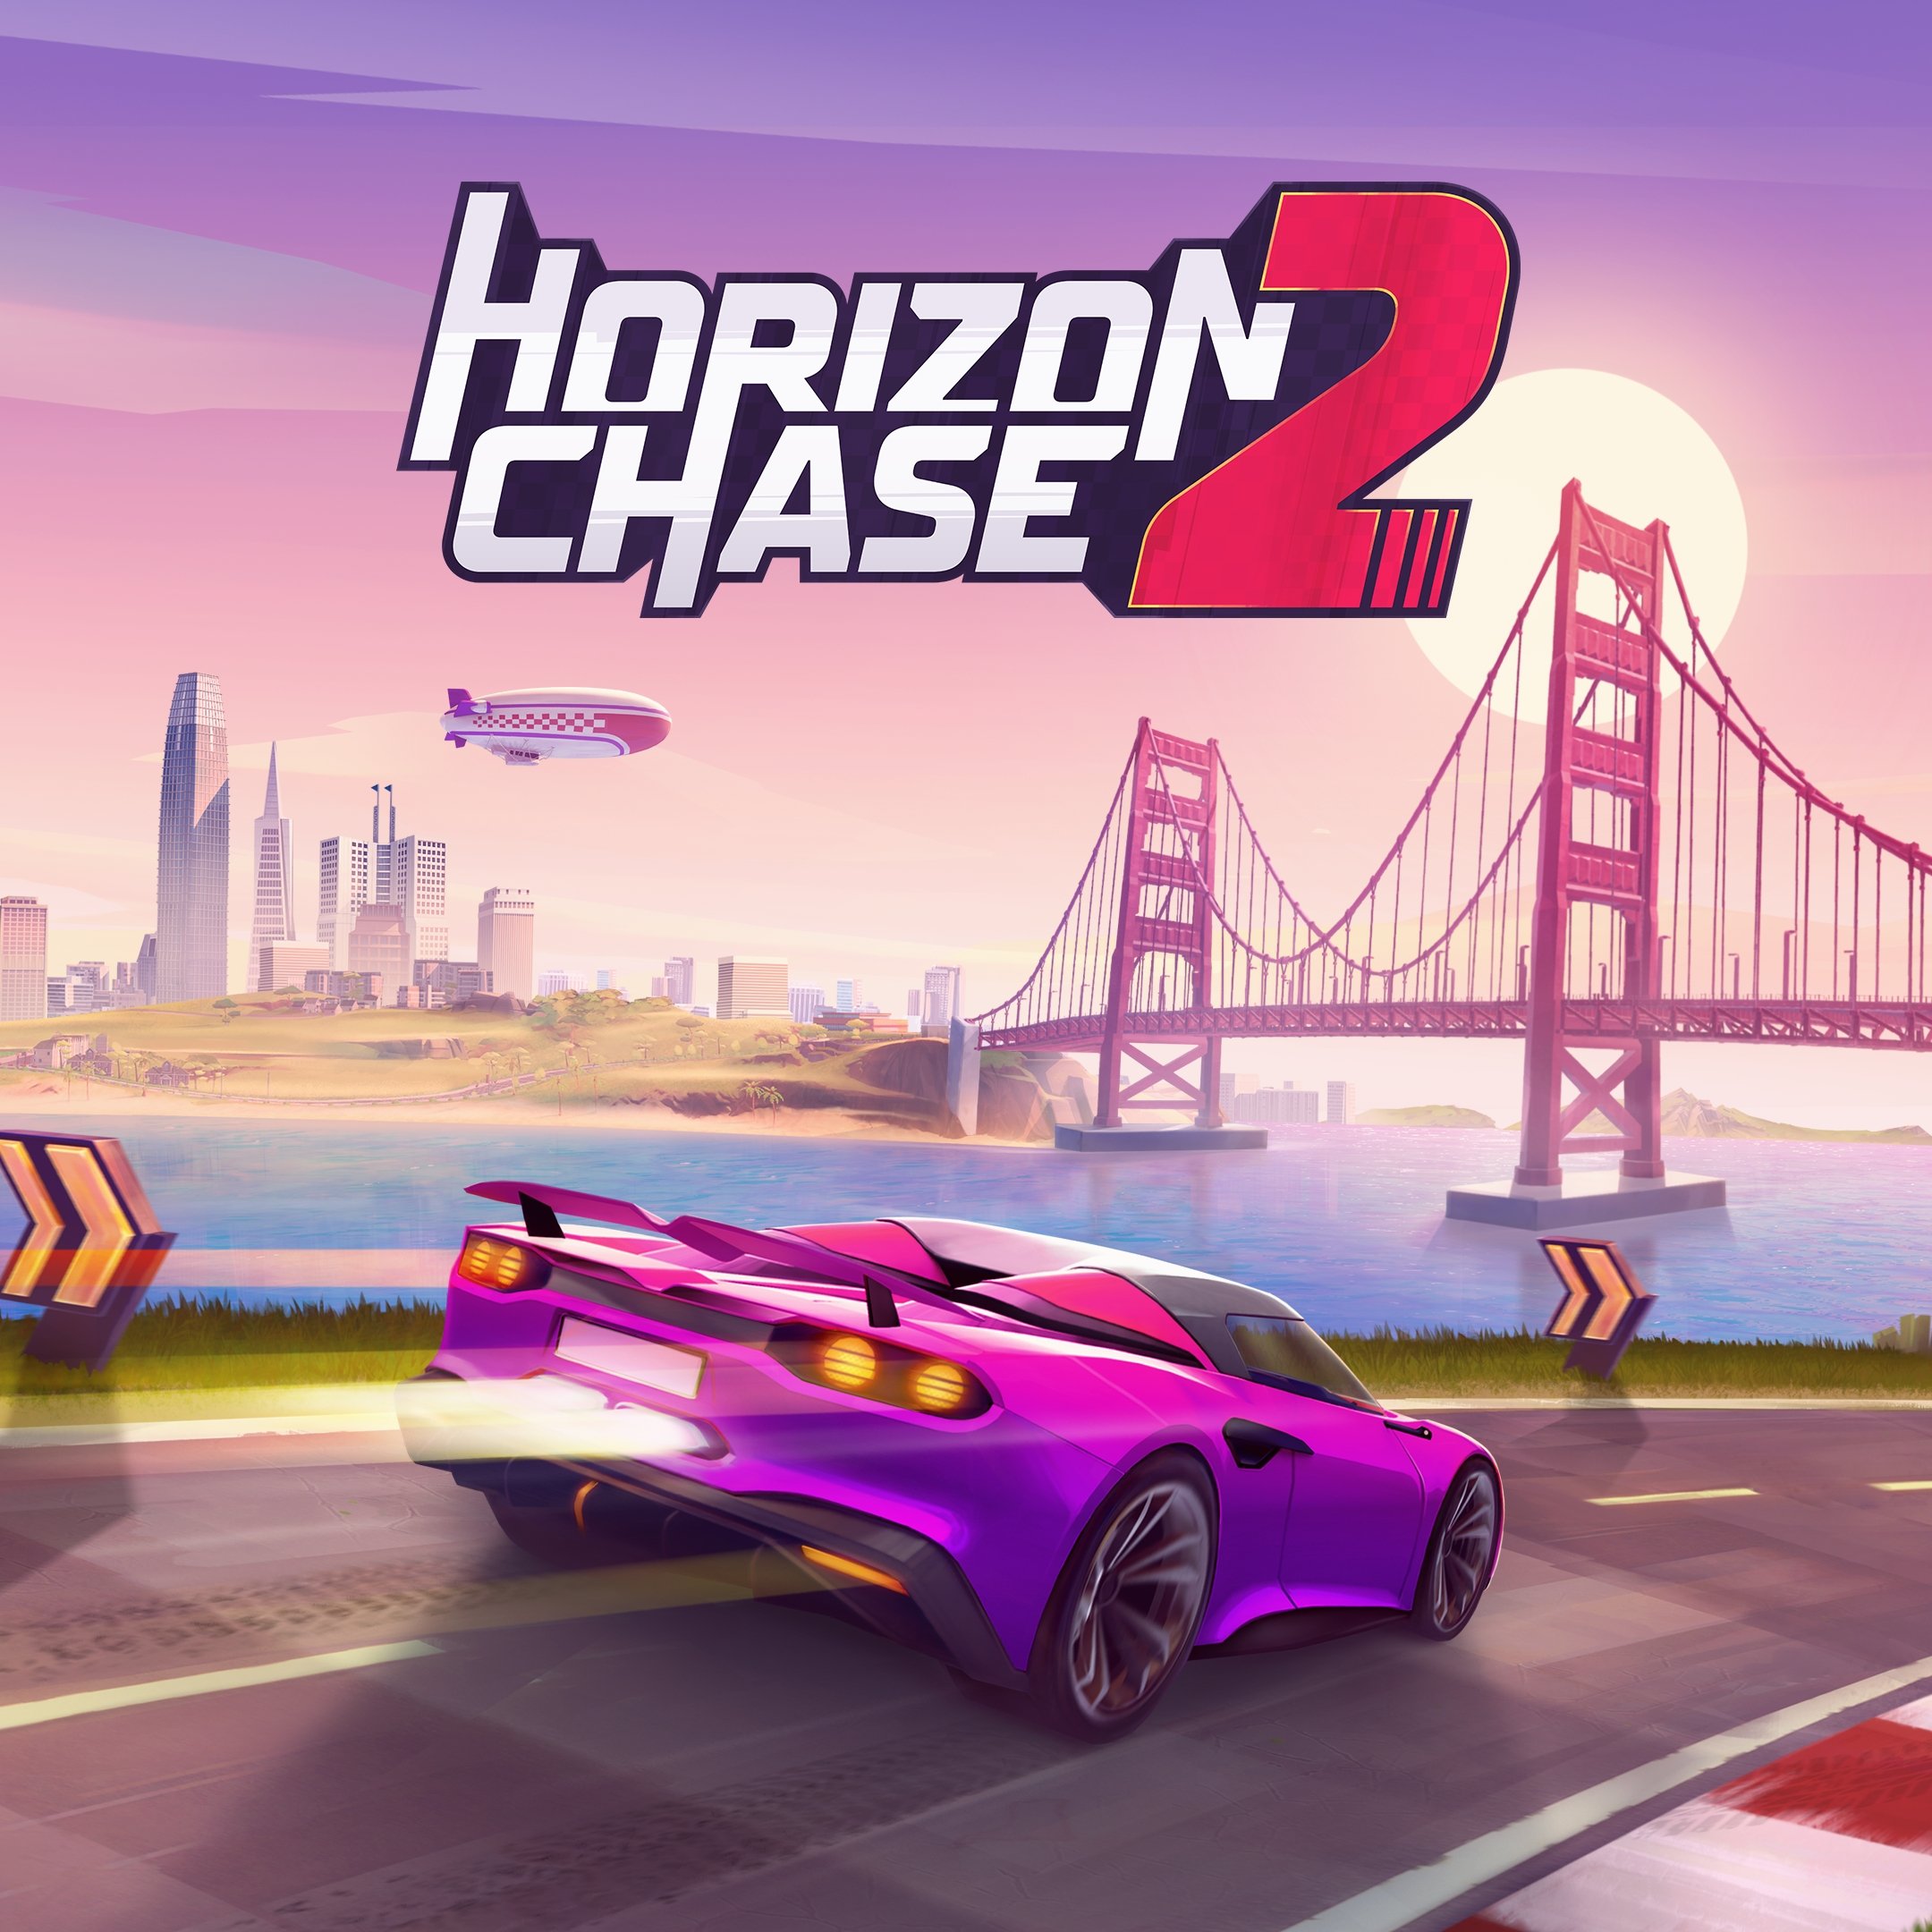 stadig Prøv det barmhjertighed Horizon Chase 2 announced for consoles, PC, and Apple Arcade - Gematsu